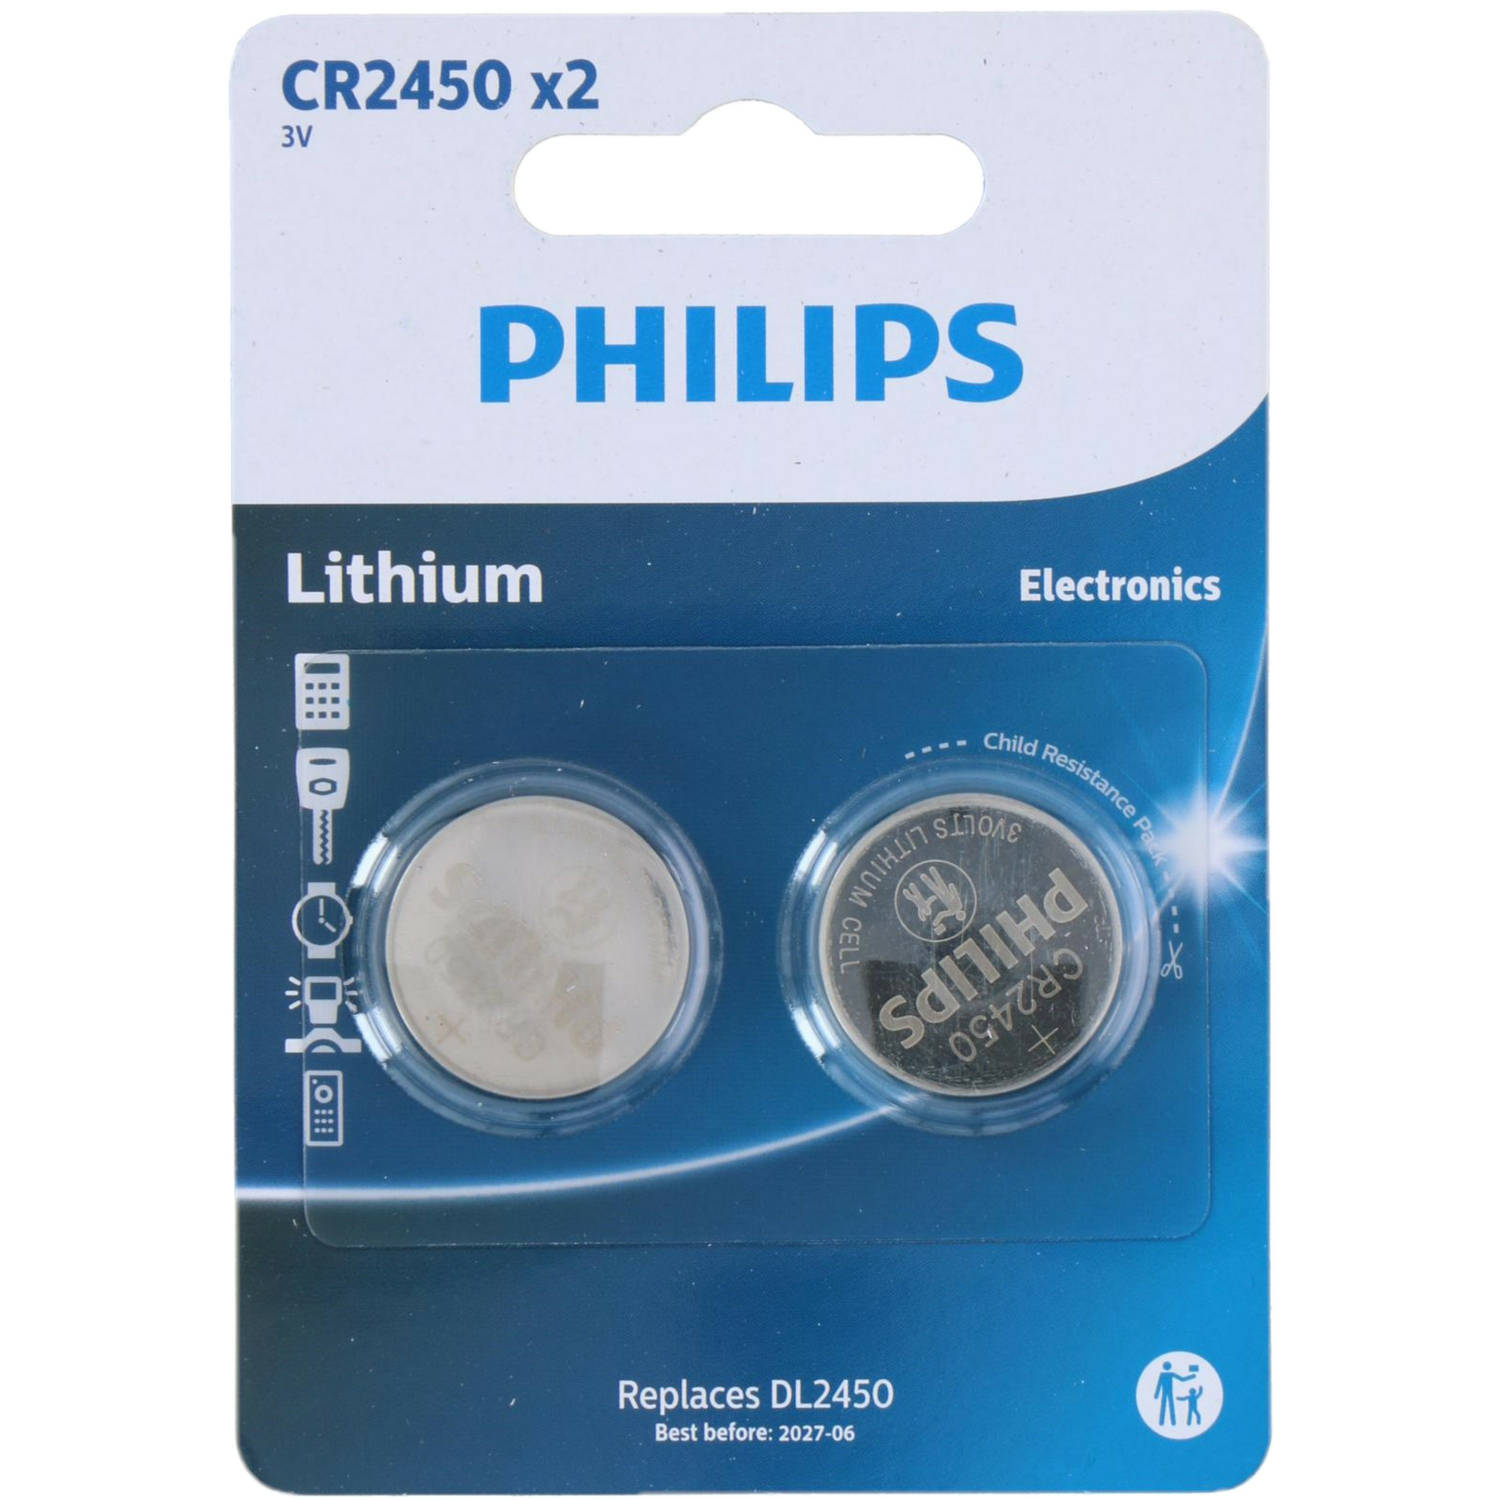 Philips knoopcel batterijen CR2450 - 2x stuks - Knoopcel batterijen